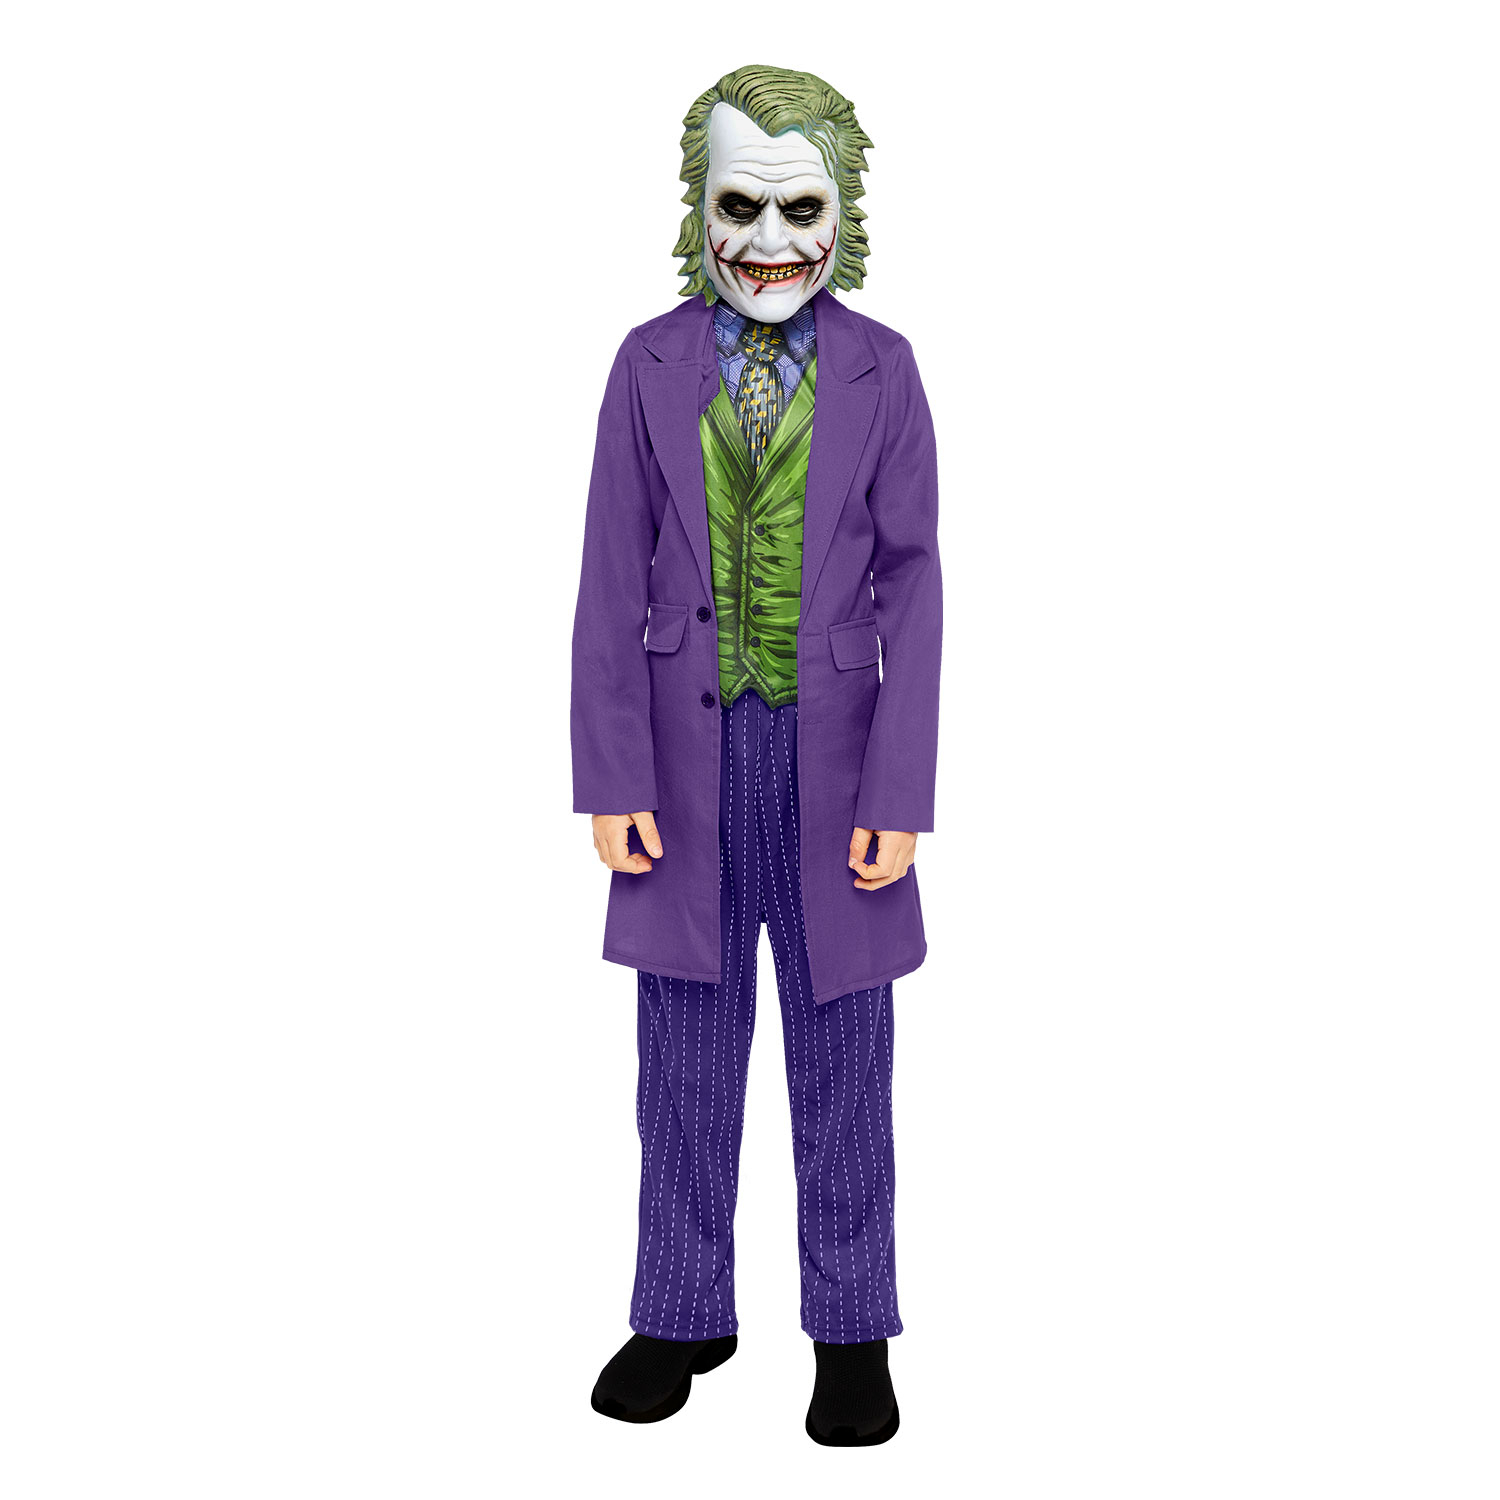 Joker Movie Costume Age 8 10 Years 1 Pc Amscan International